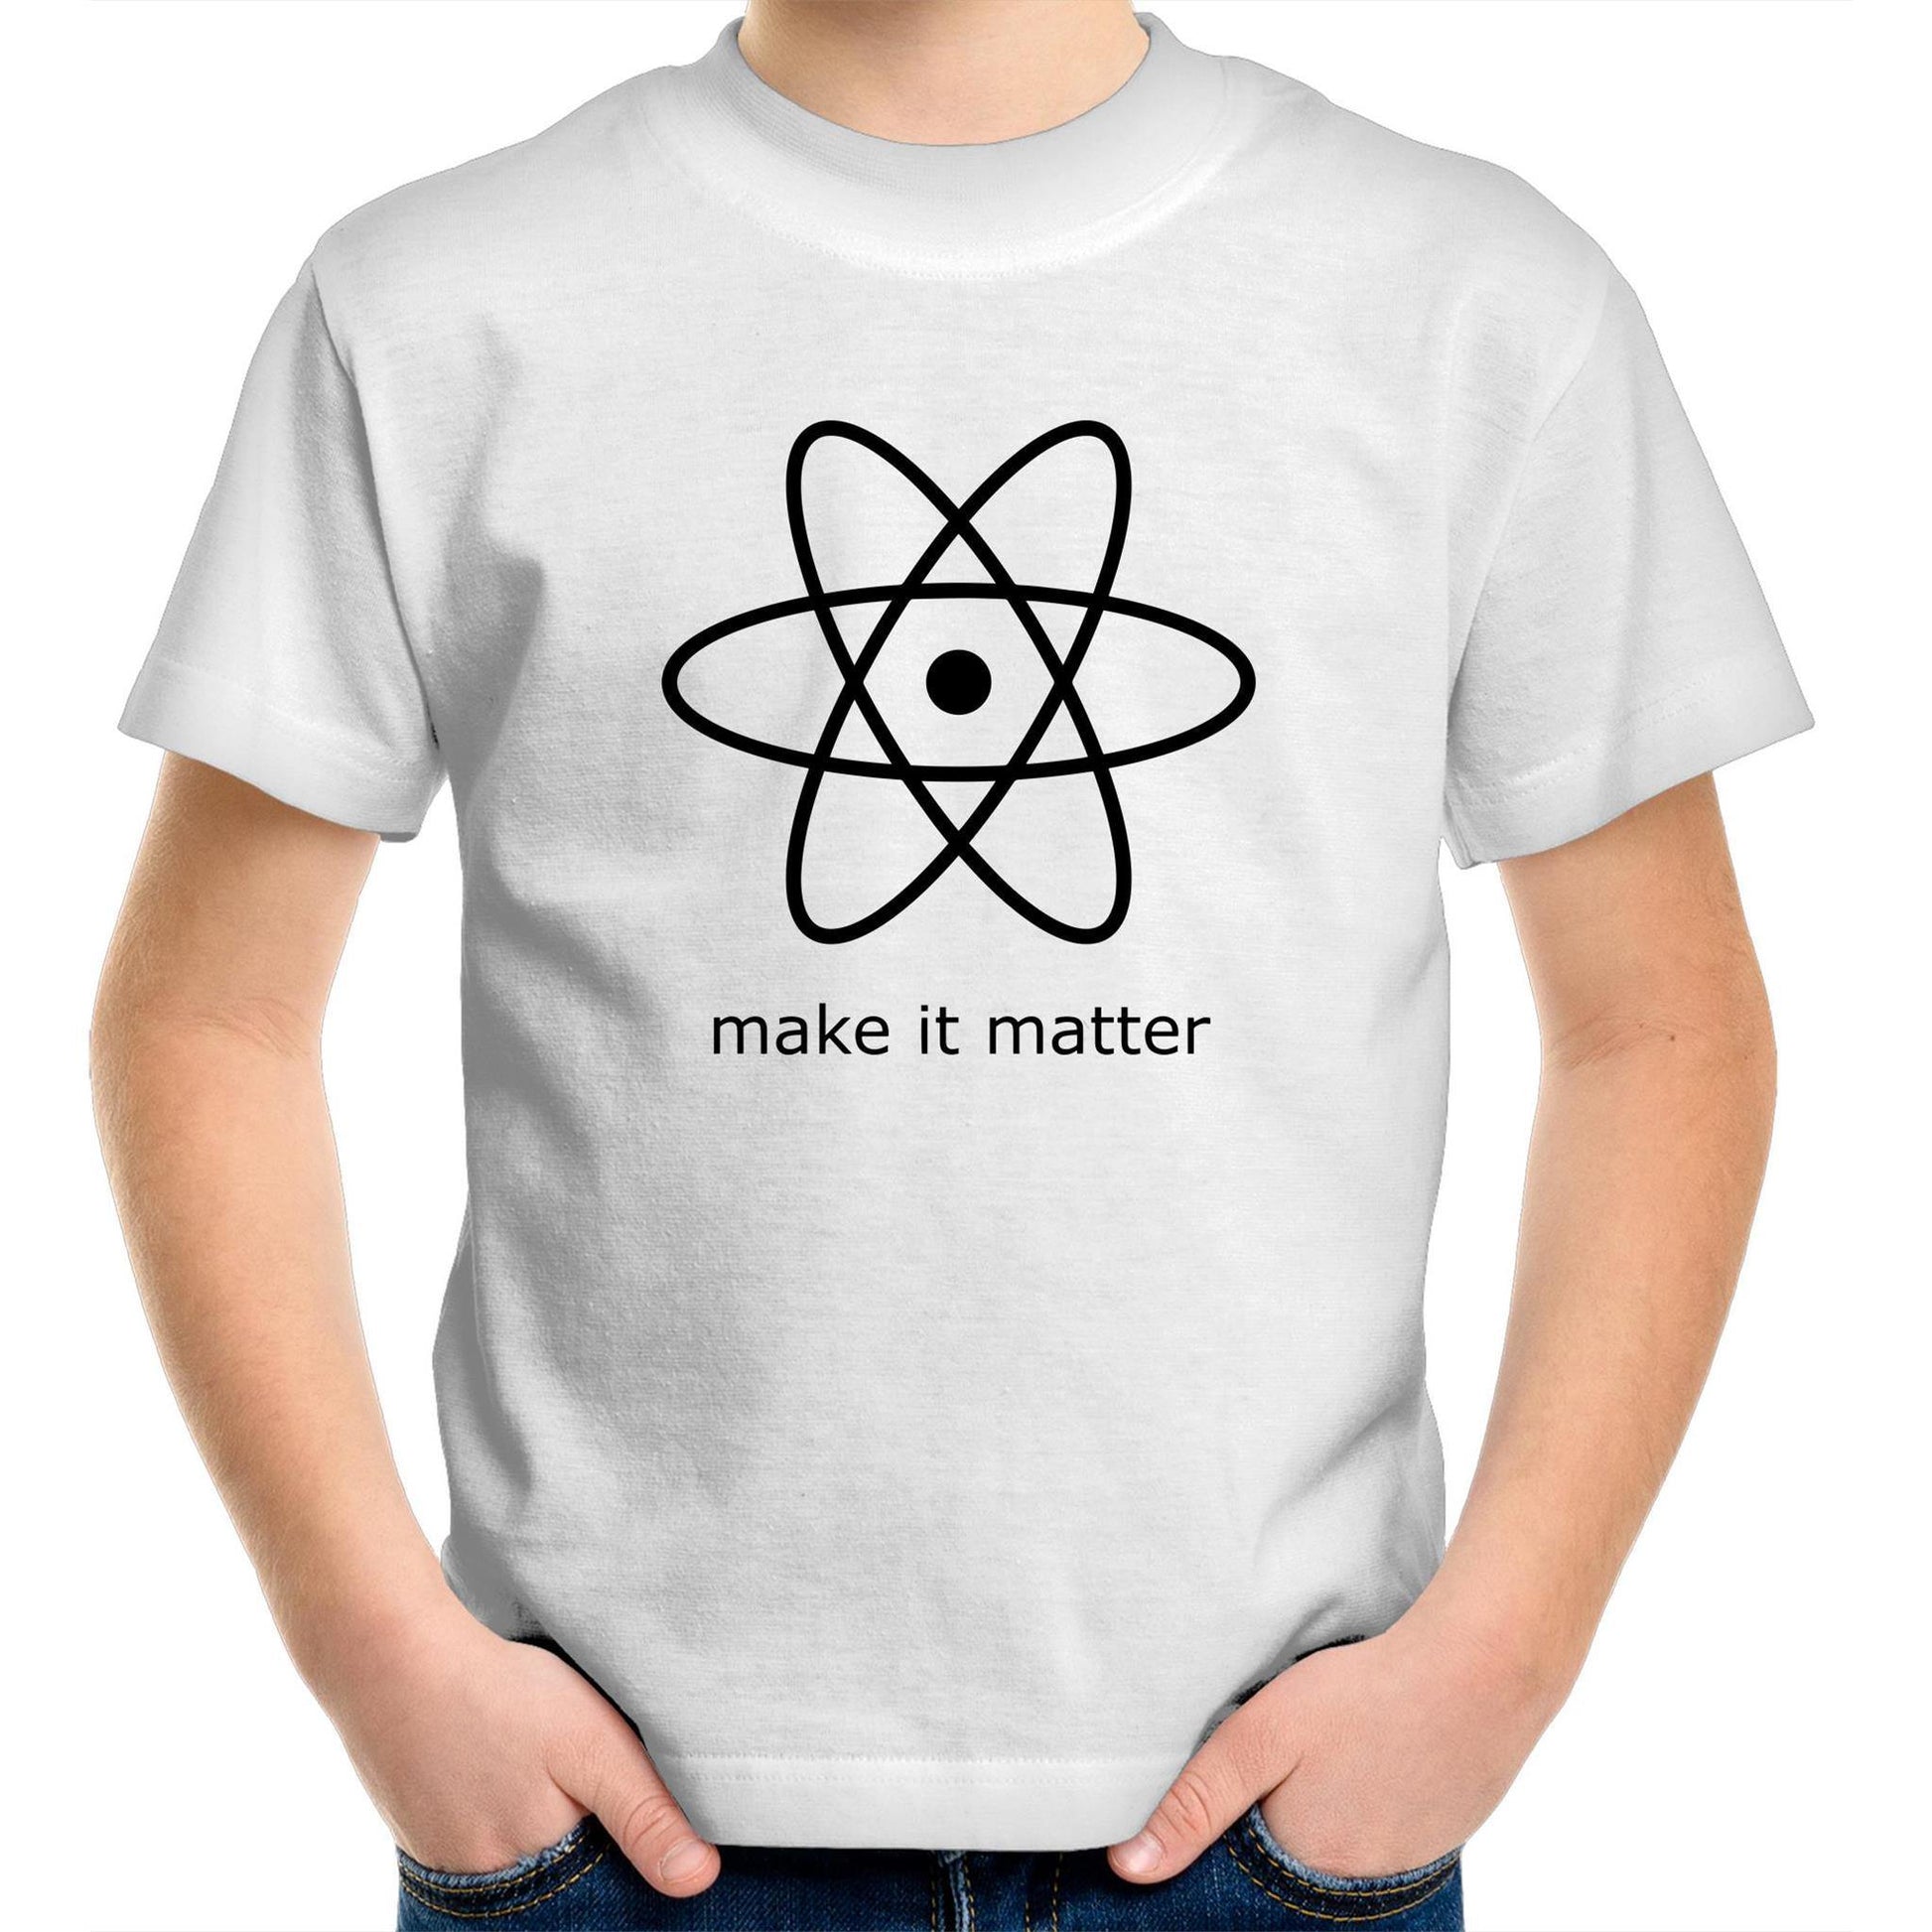 Make It Matter - Kids Youth Crew T-Shirt White Kids Youth T-shirt Science